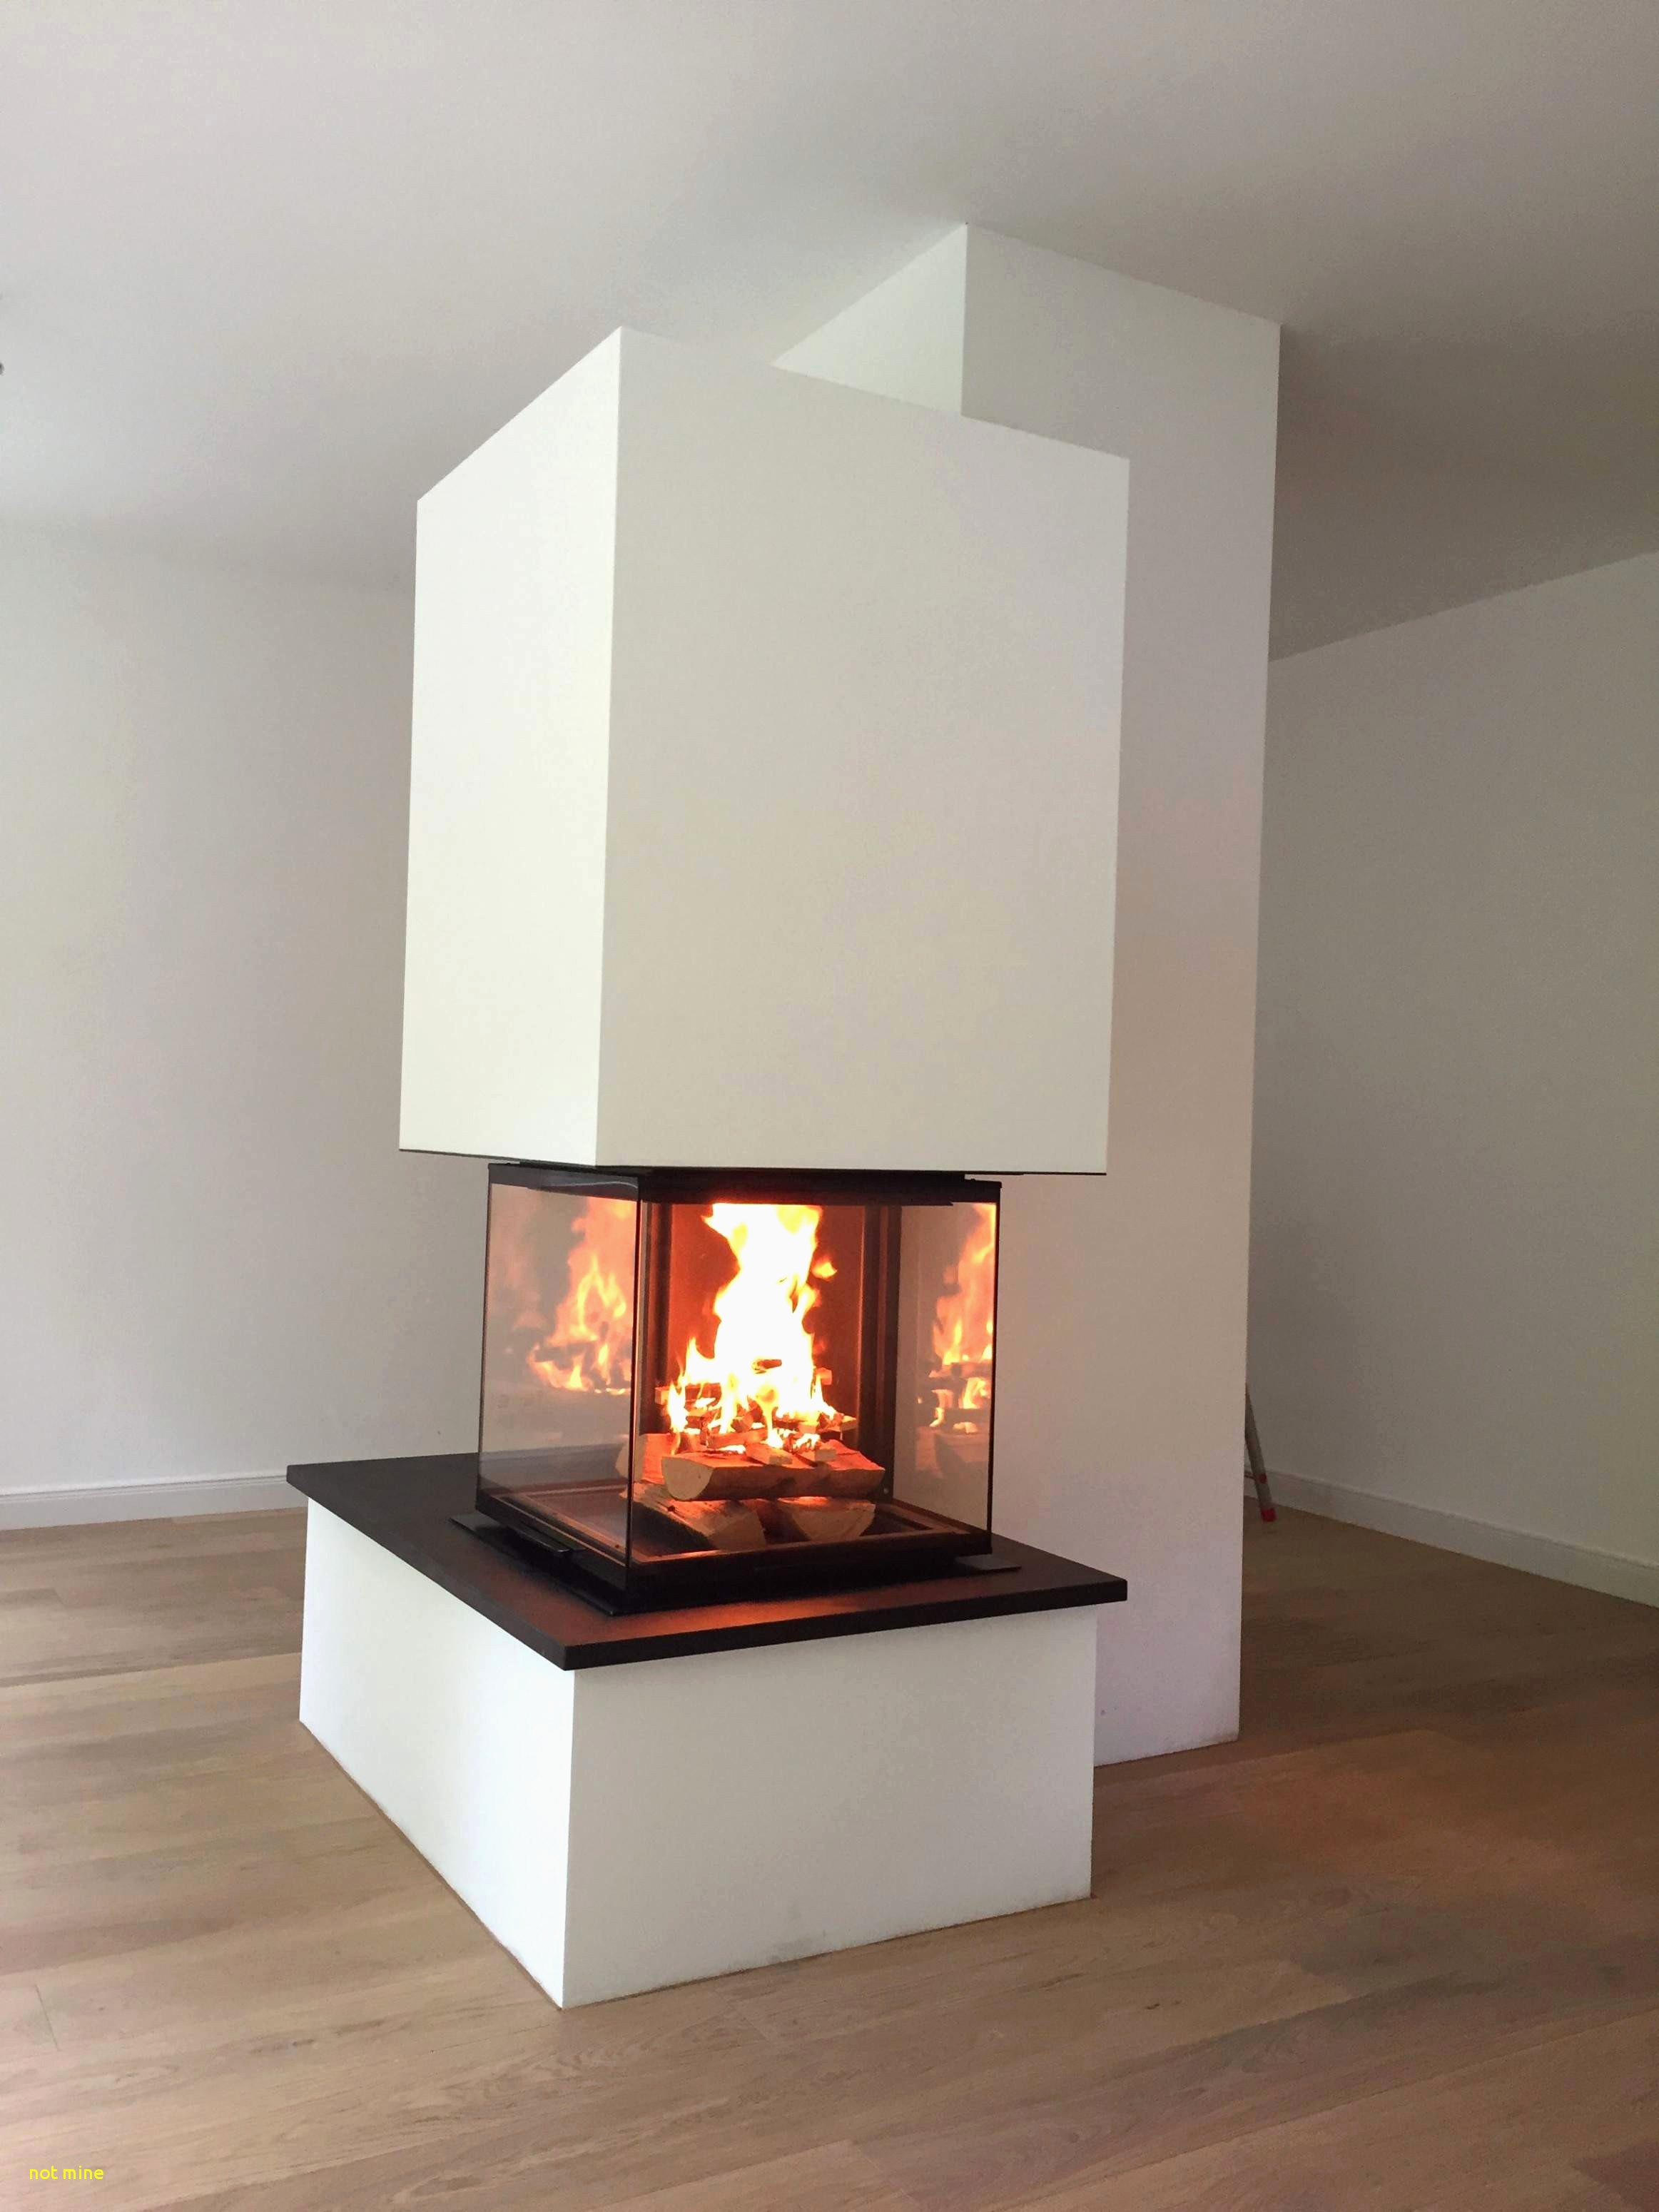 Fireplace without Hearth Awesome Kaminofen Mit Sitzbank Fröhlich Kamin Ideen Wohnzimmer Luxus